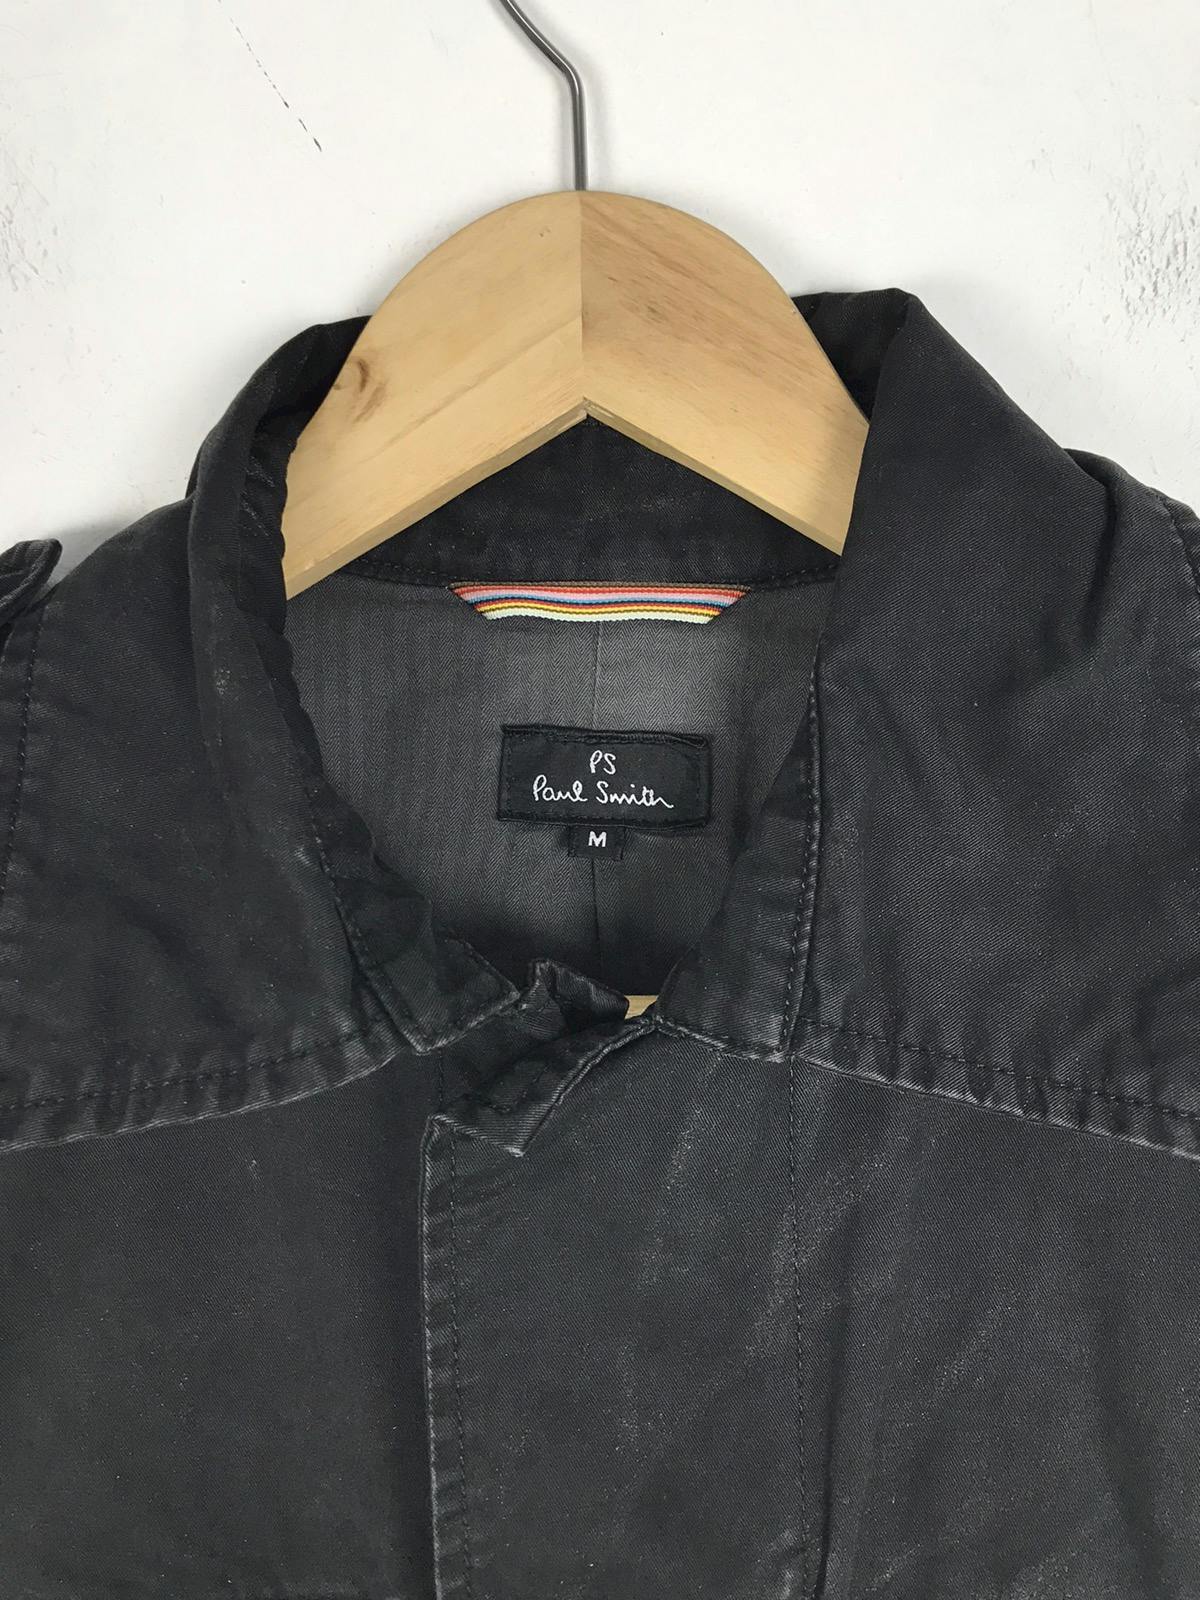 Vintage Paul Smith Overcoat Dark Jacket - 3